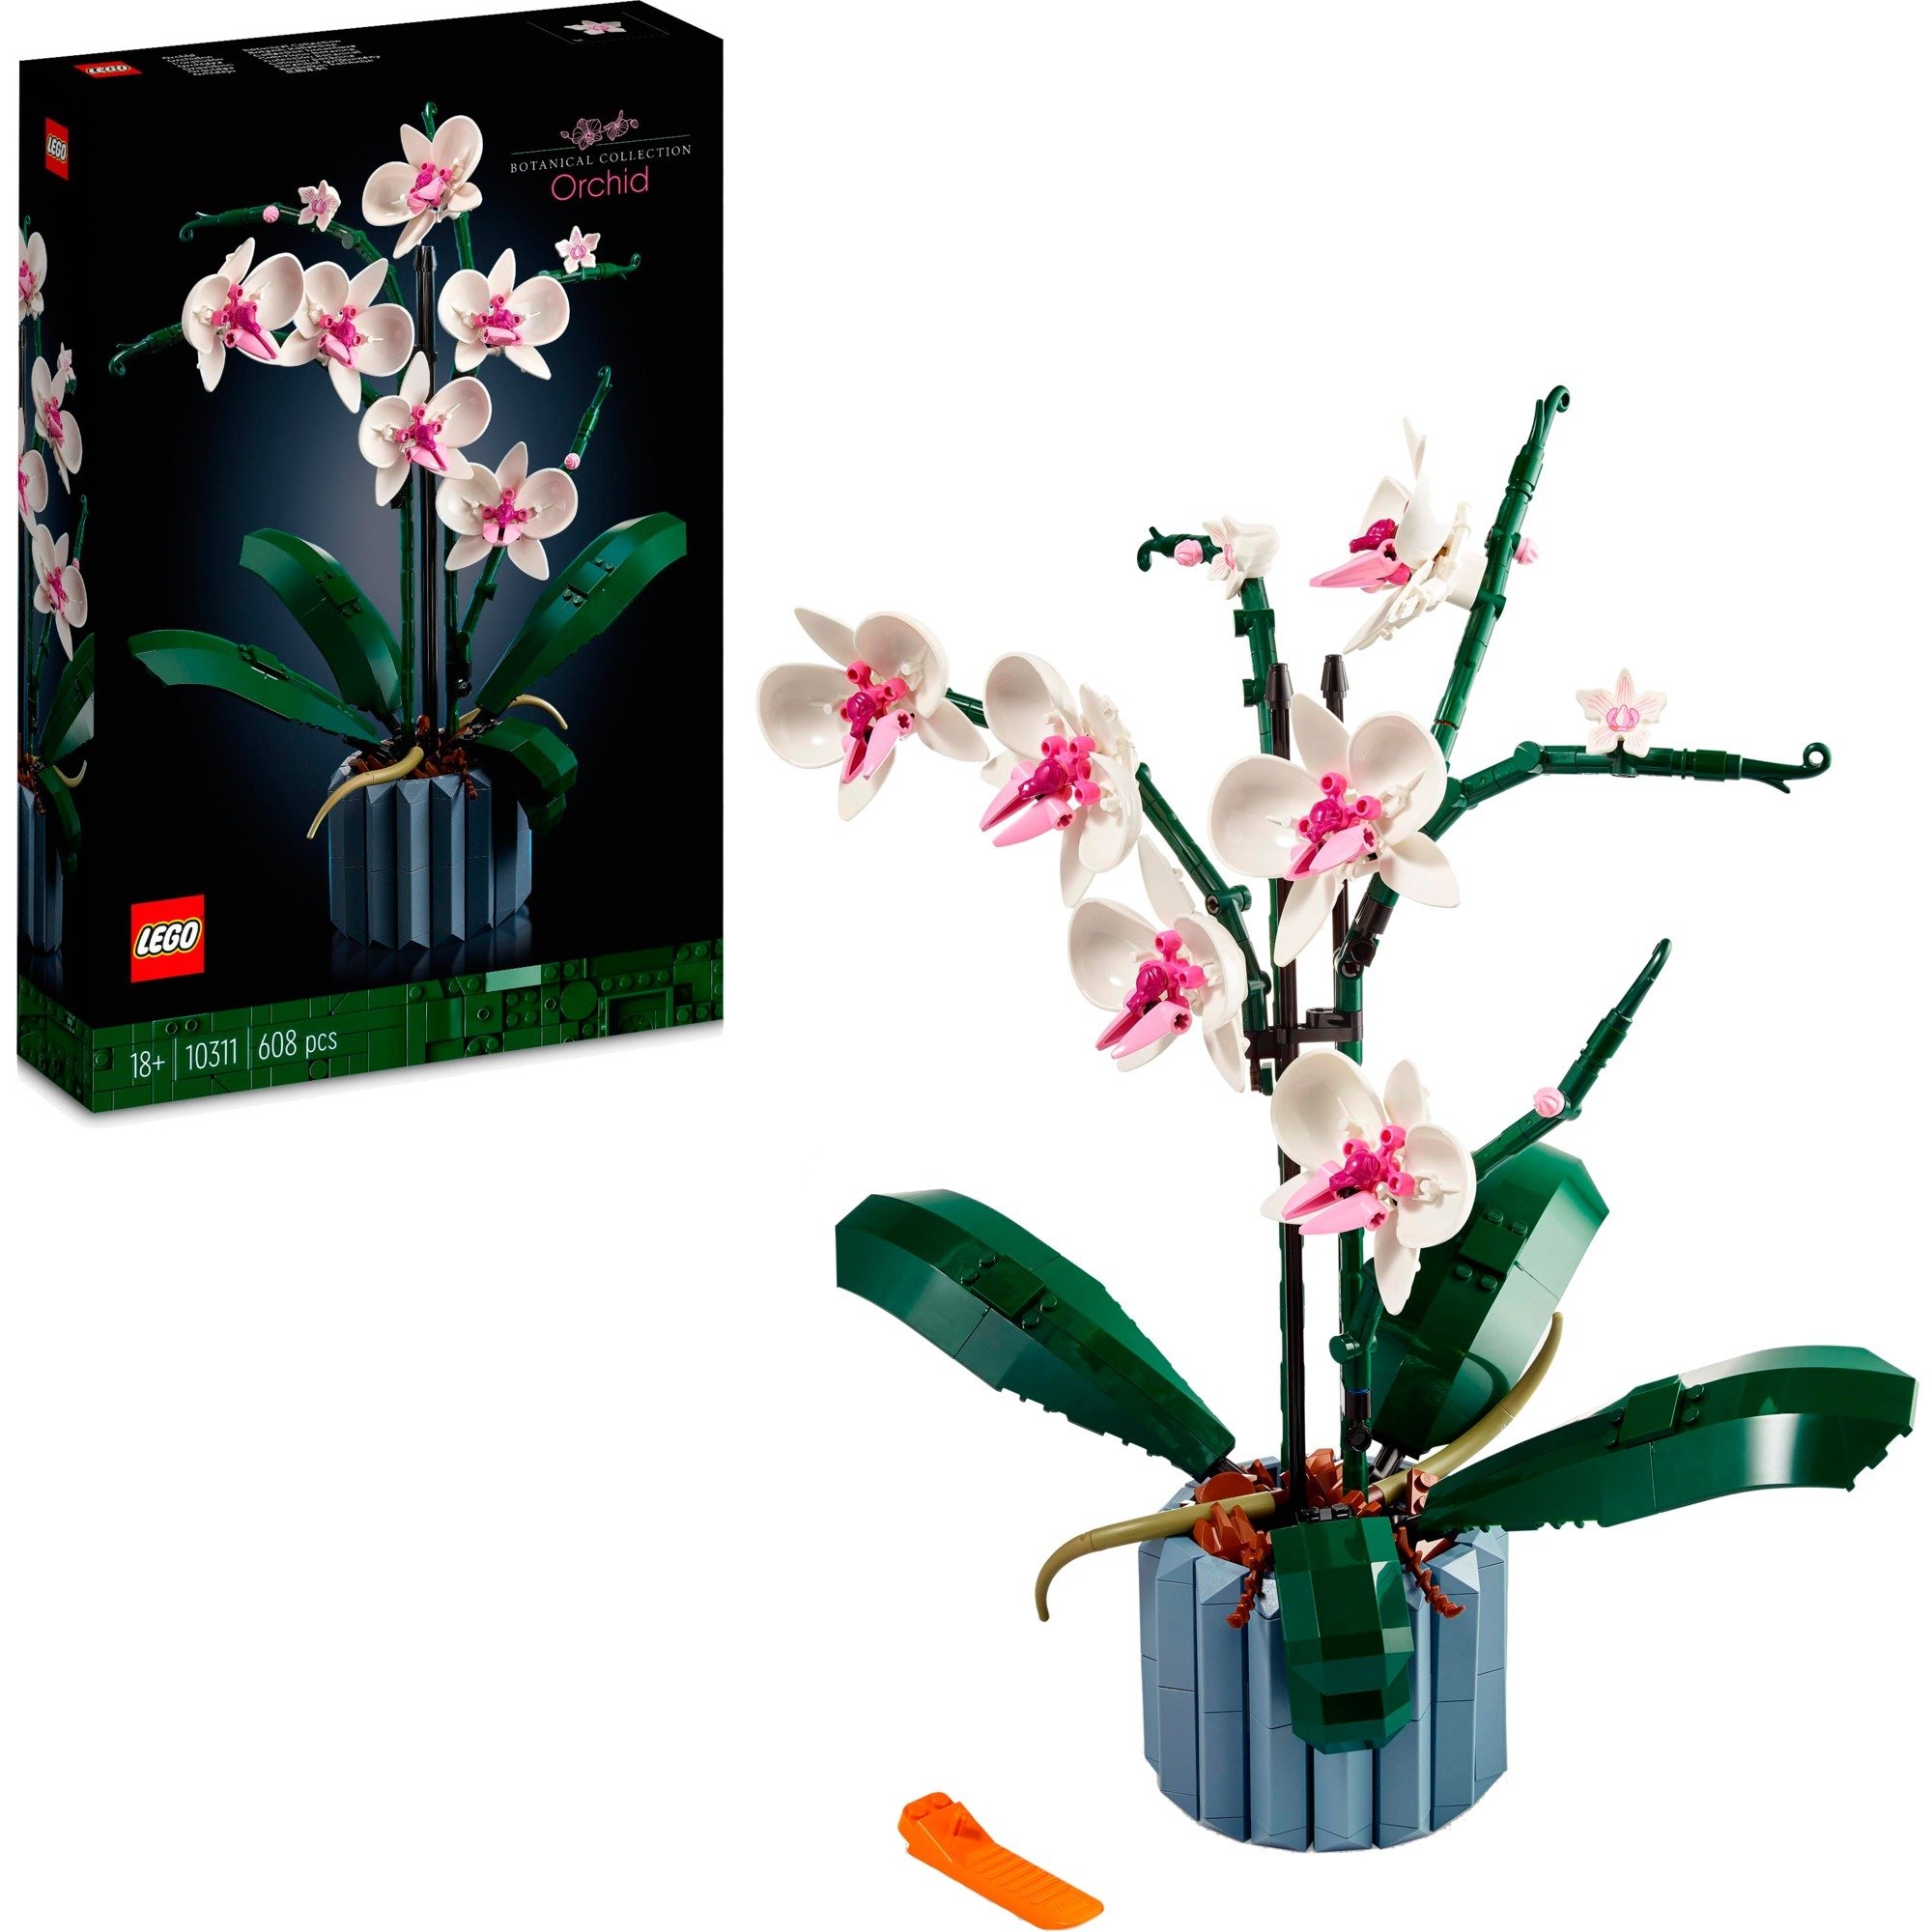 10311 Creator Expert Orchidee, Konstruktionsspielzeug